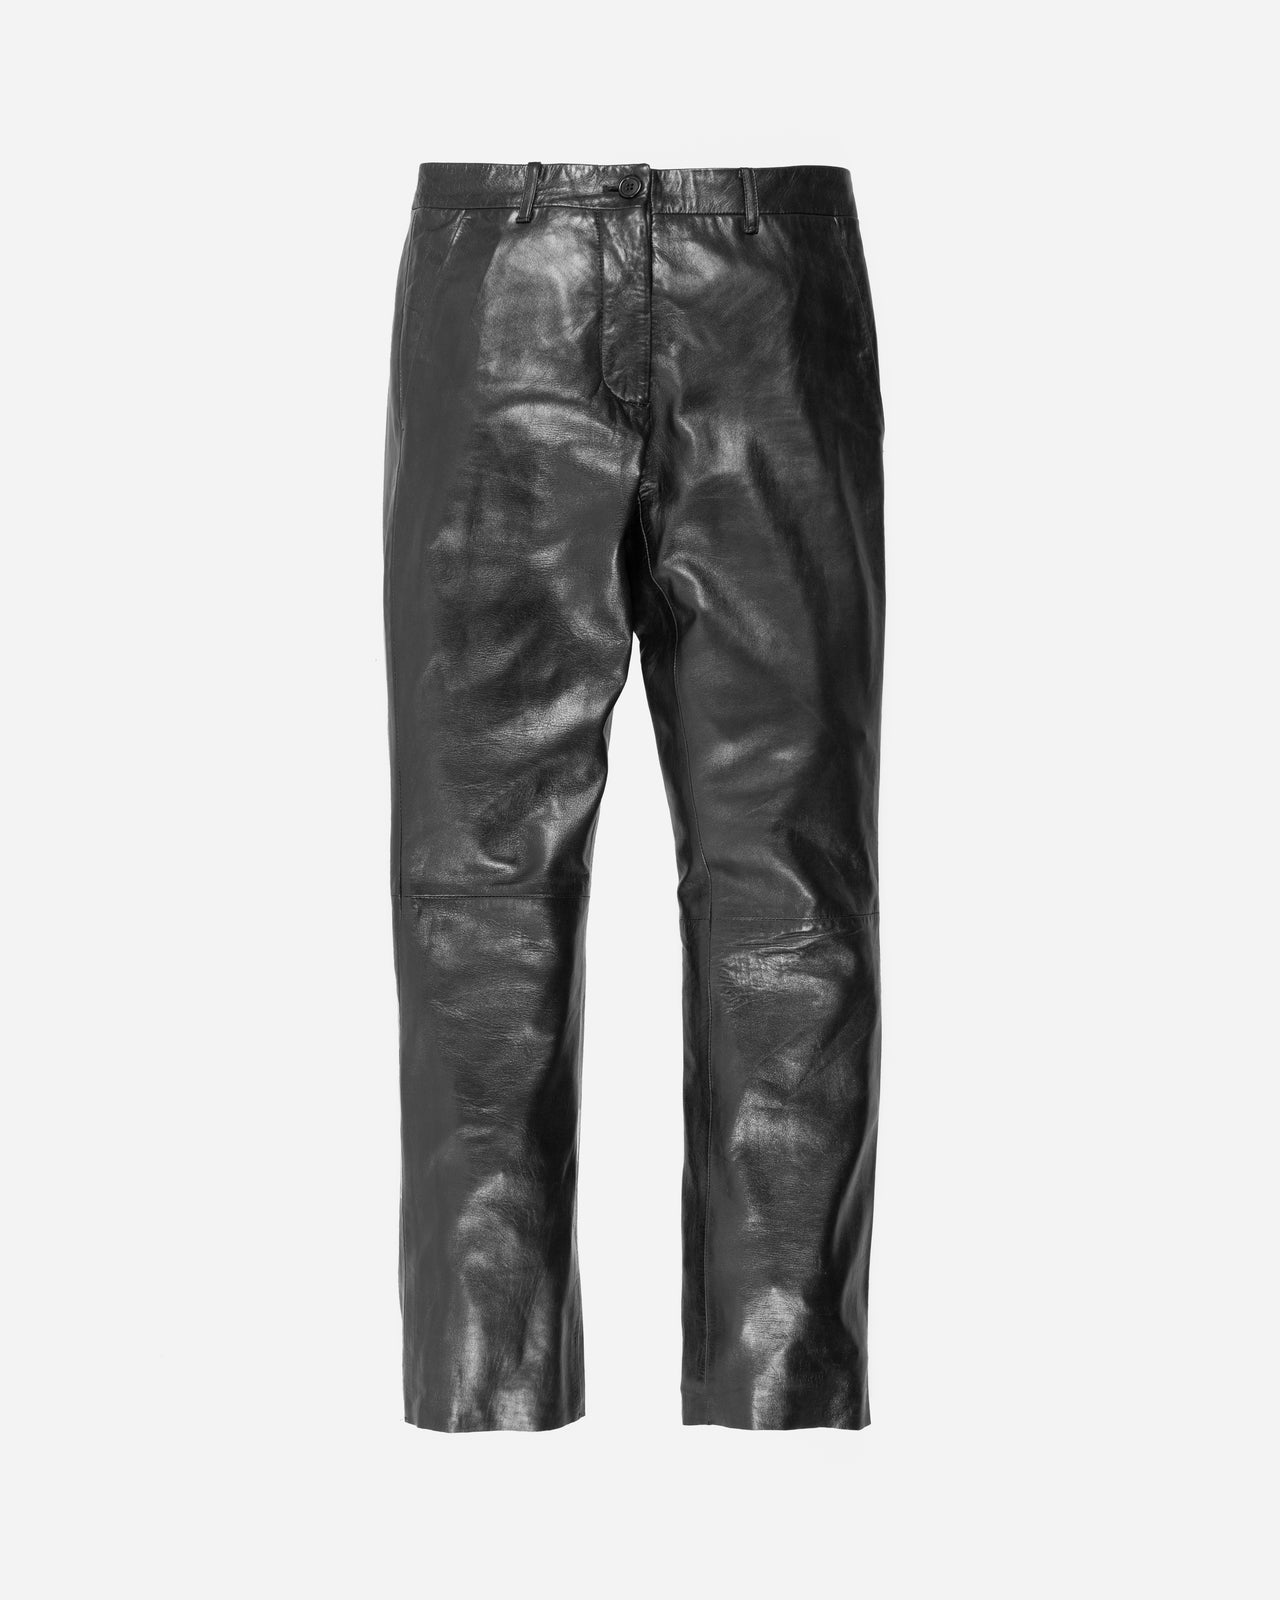 Helmut Lang Leather Pants - 2000s